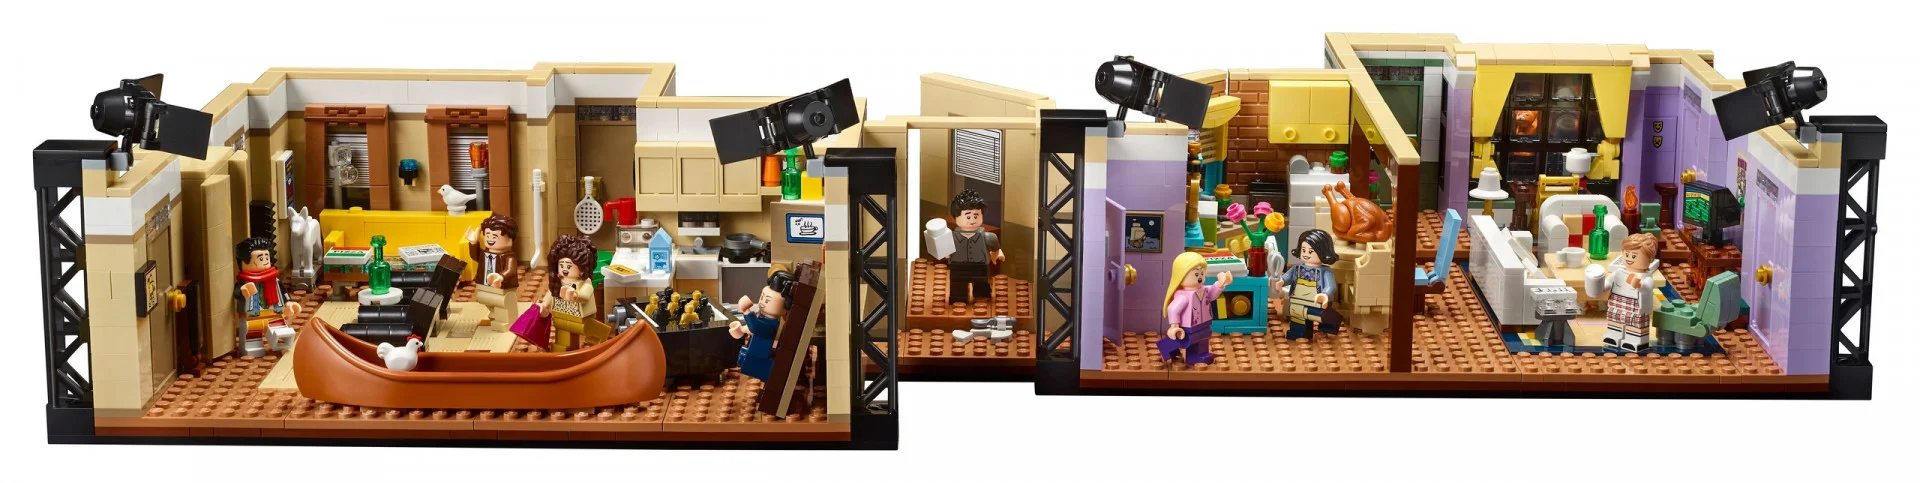 LEGO представила набор по мотивам сериала «Друзья» - фото 1